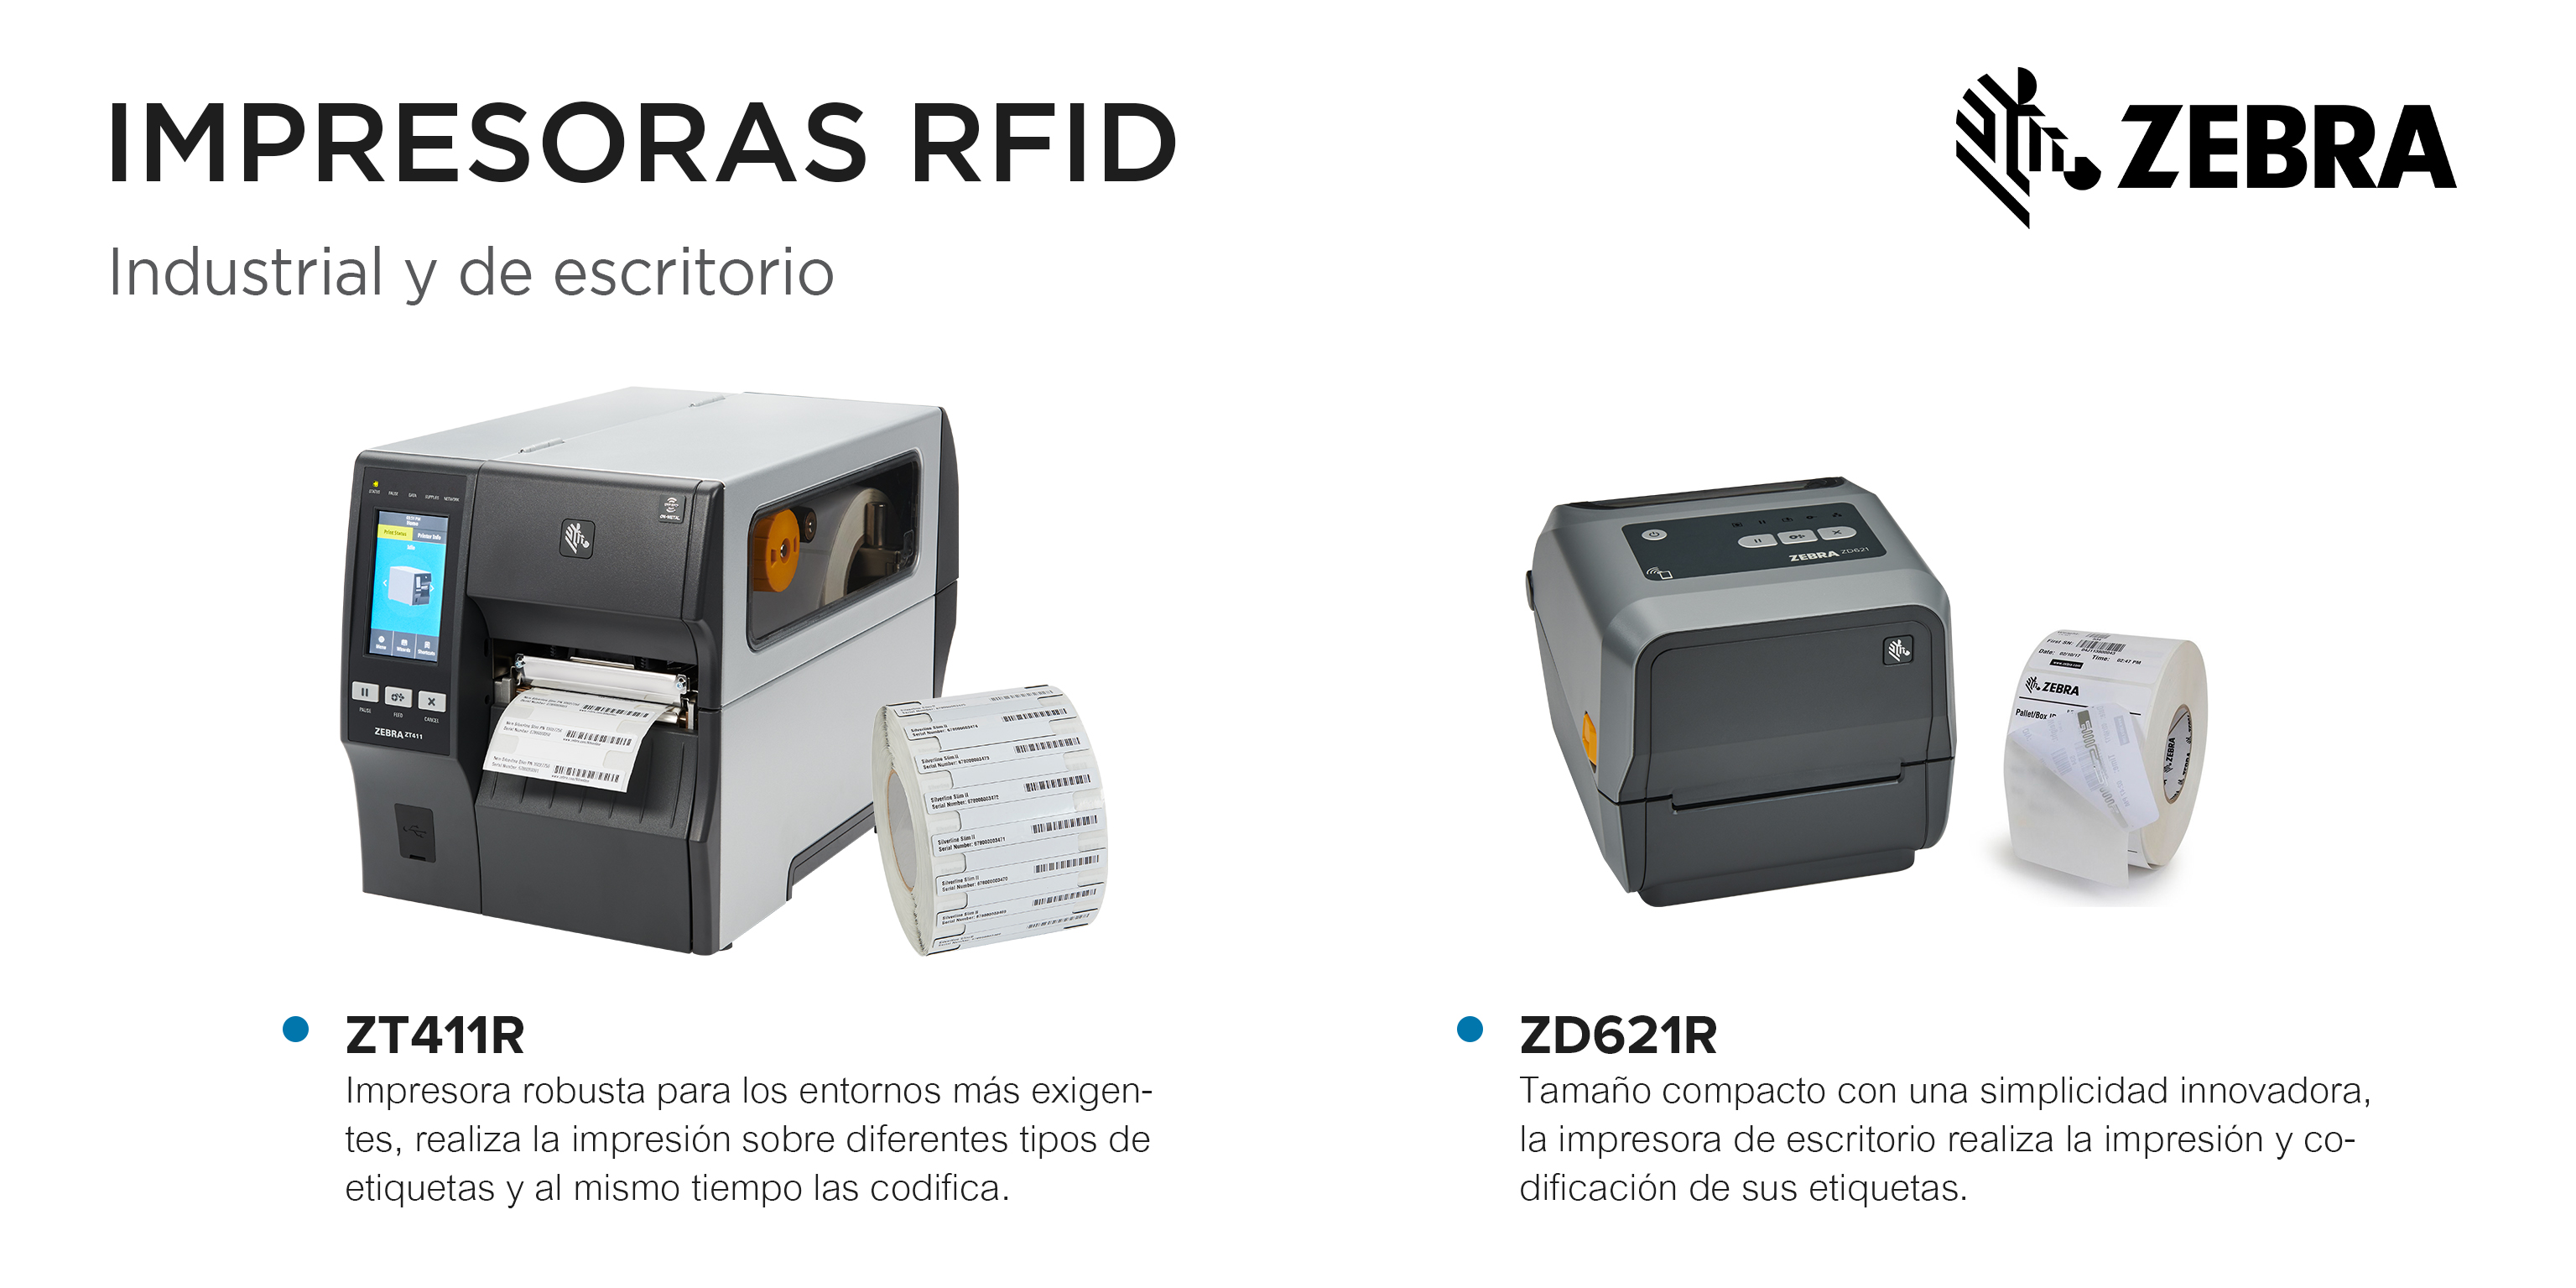 Impresoras RFID